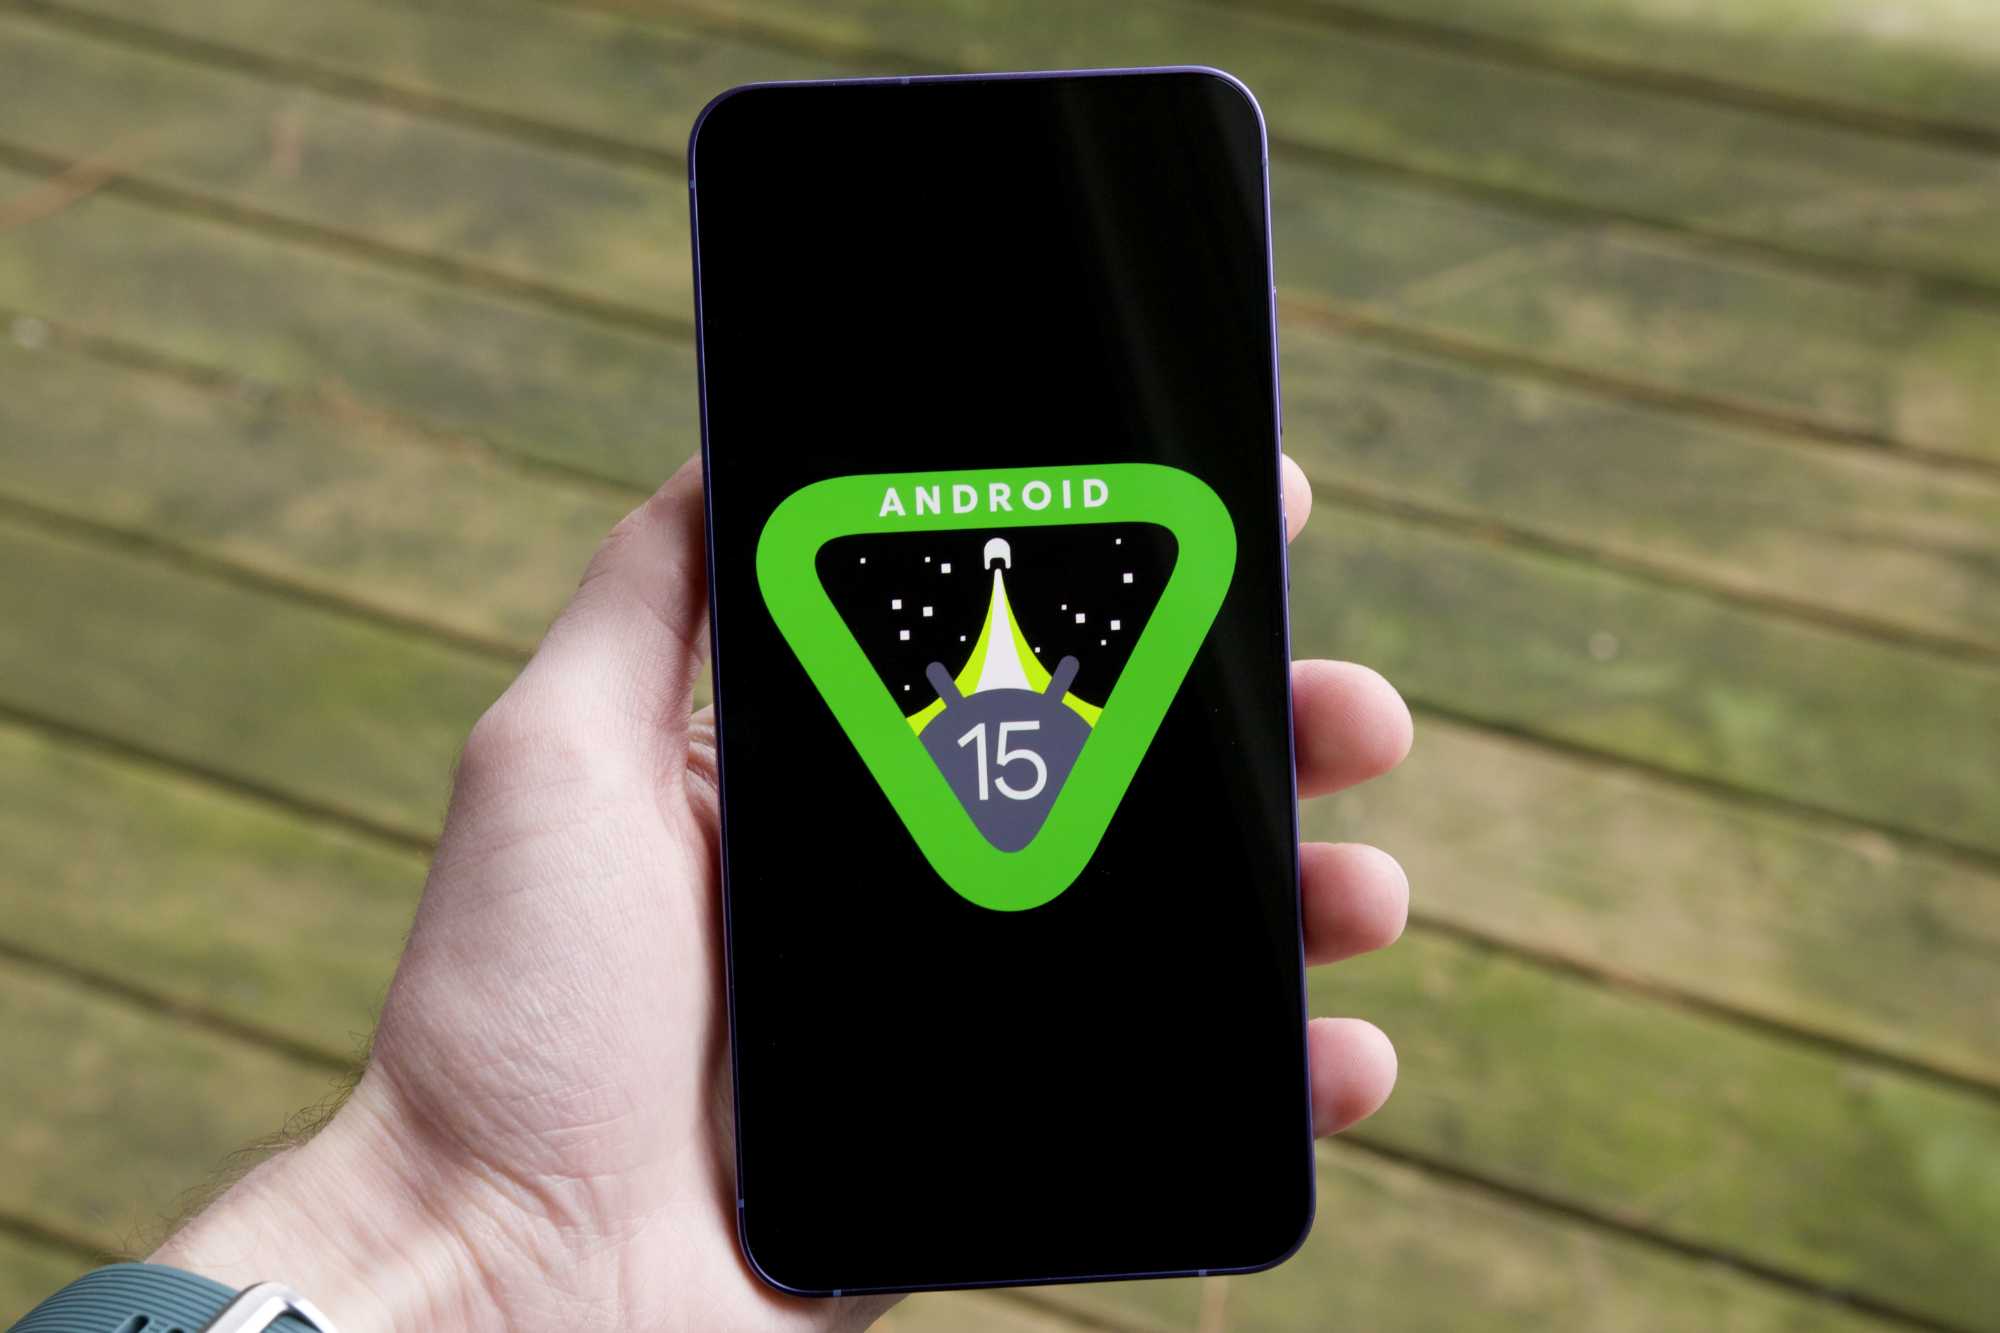 智能手机上的 Android 15 徽标。